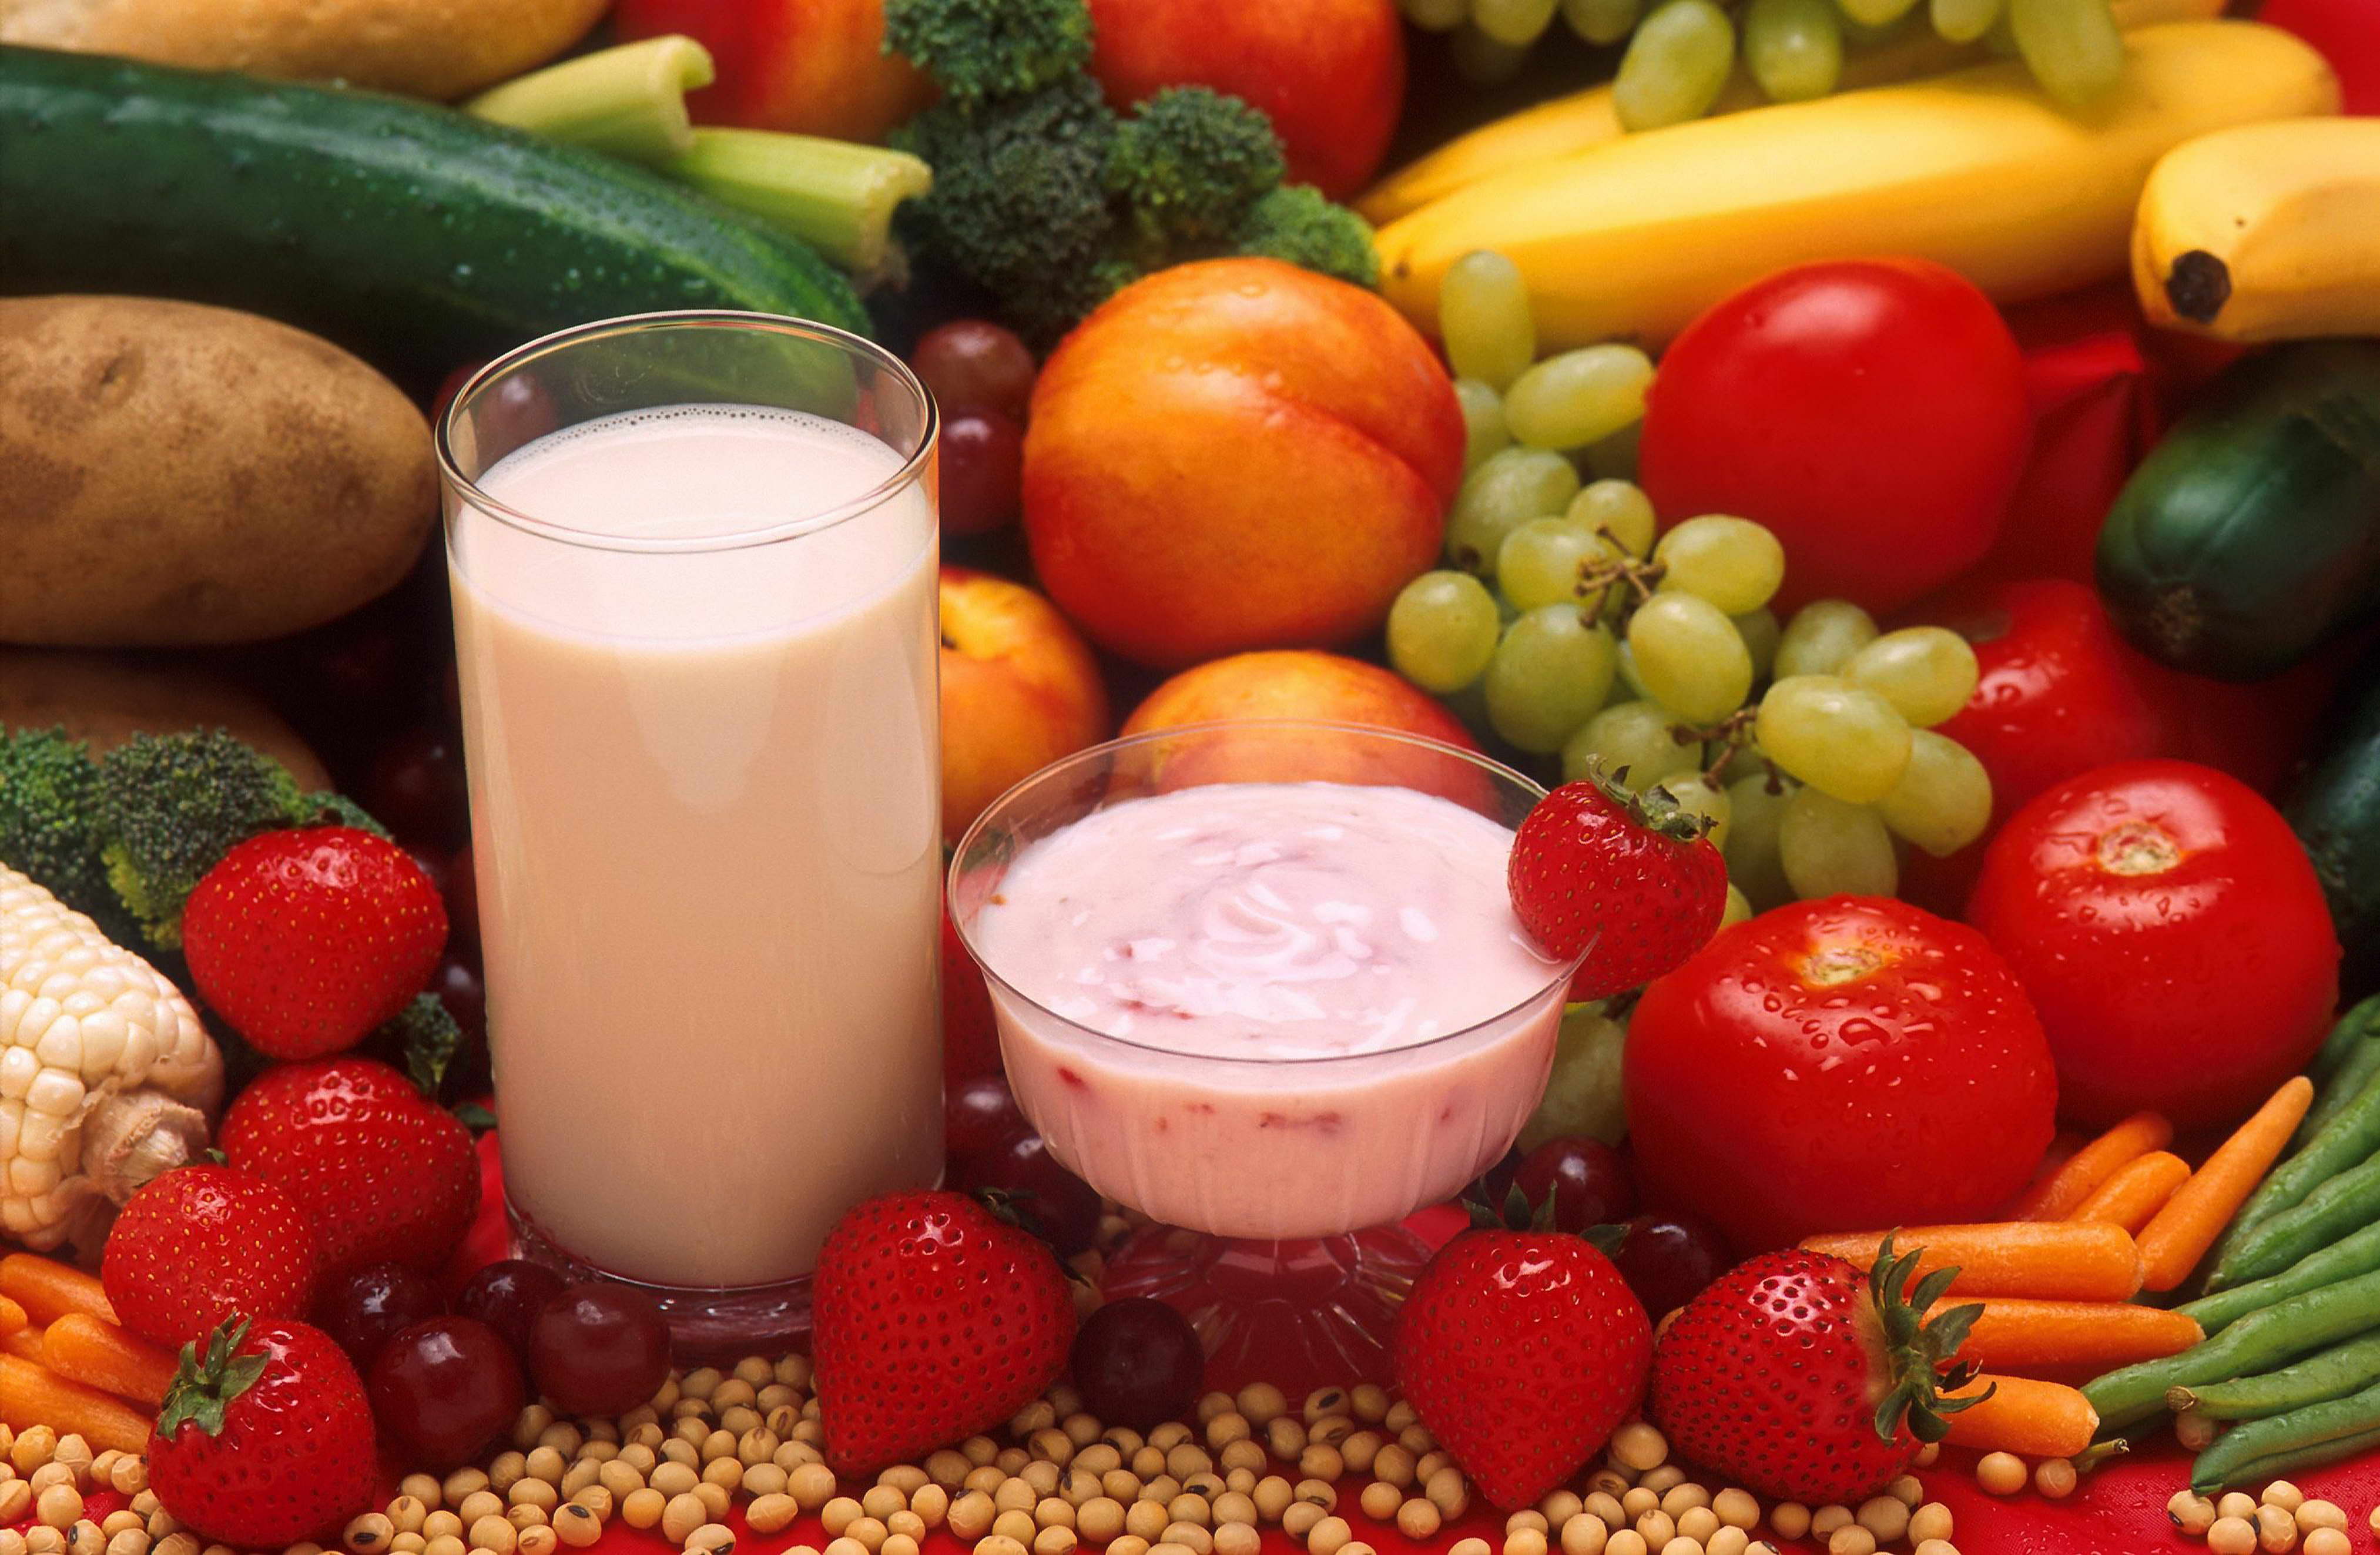 Free picture: fruits, vegetables, milk, yogurt